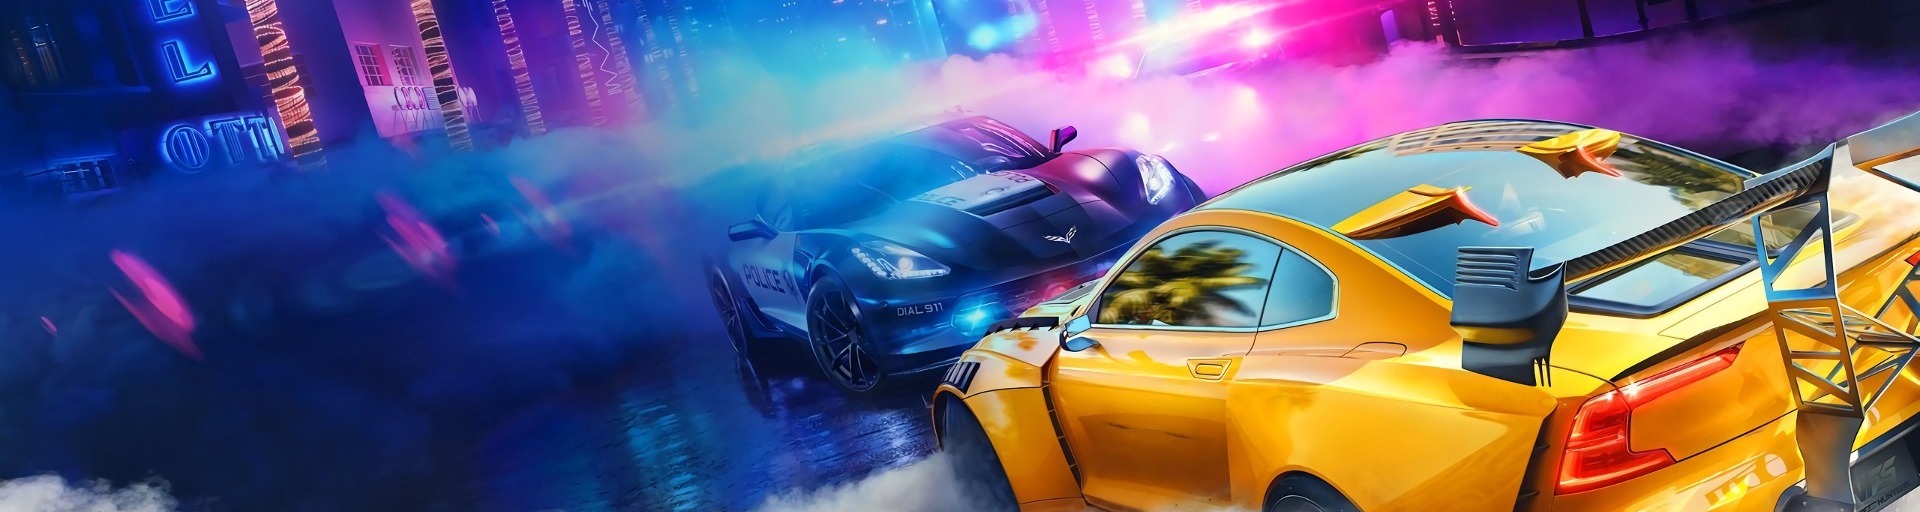 Need For Speed: Heat Xbox bg